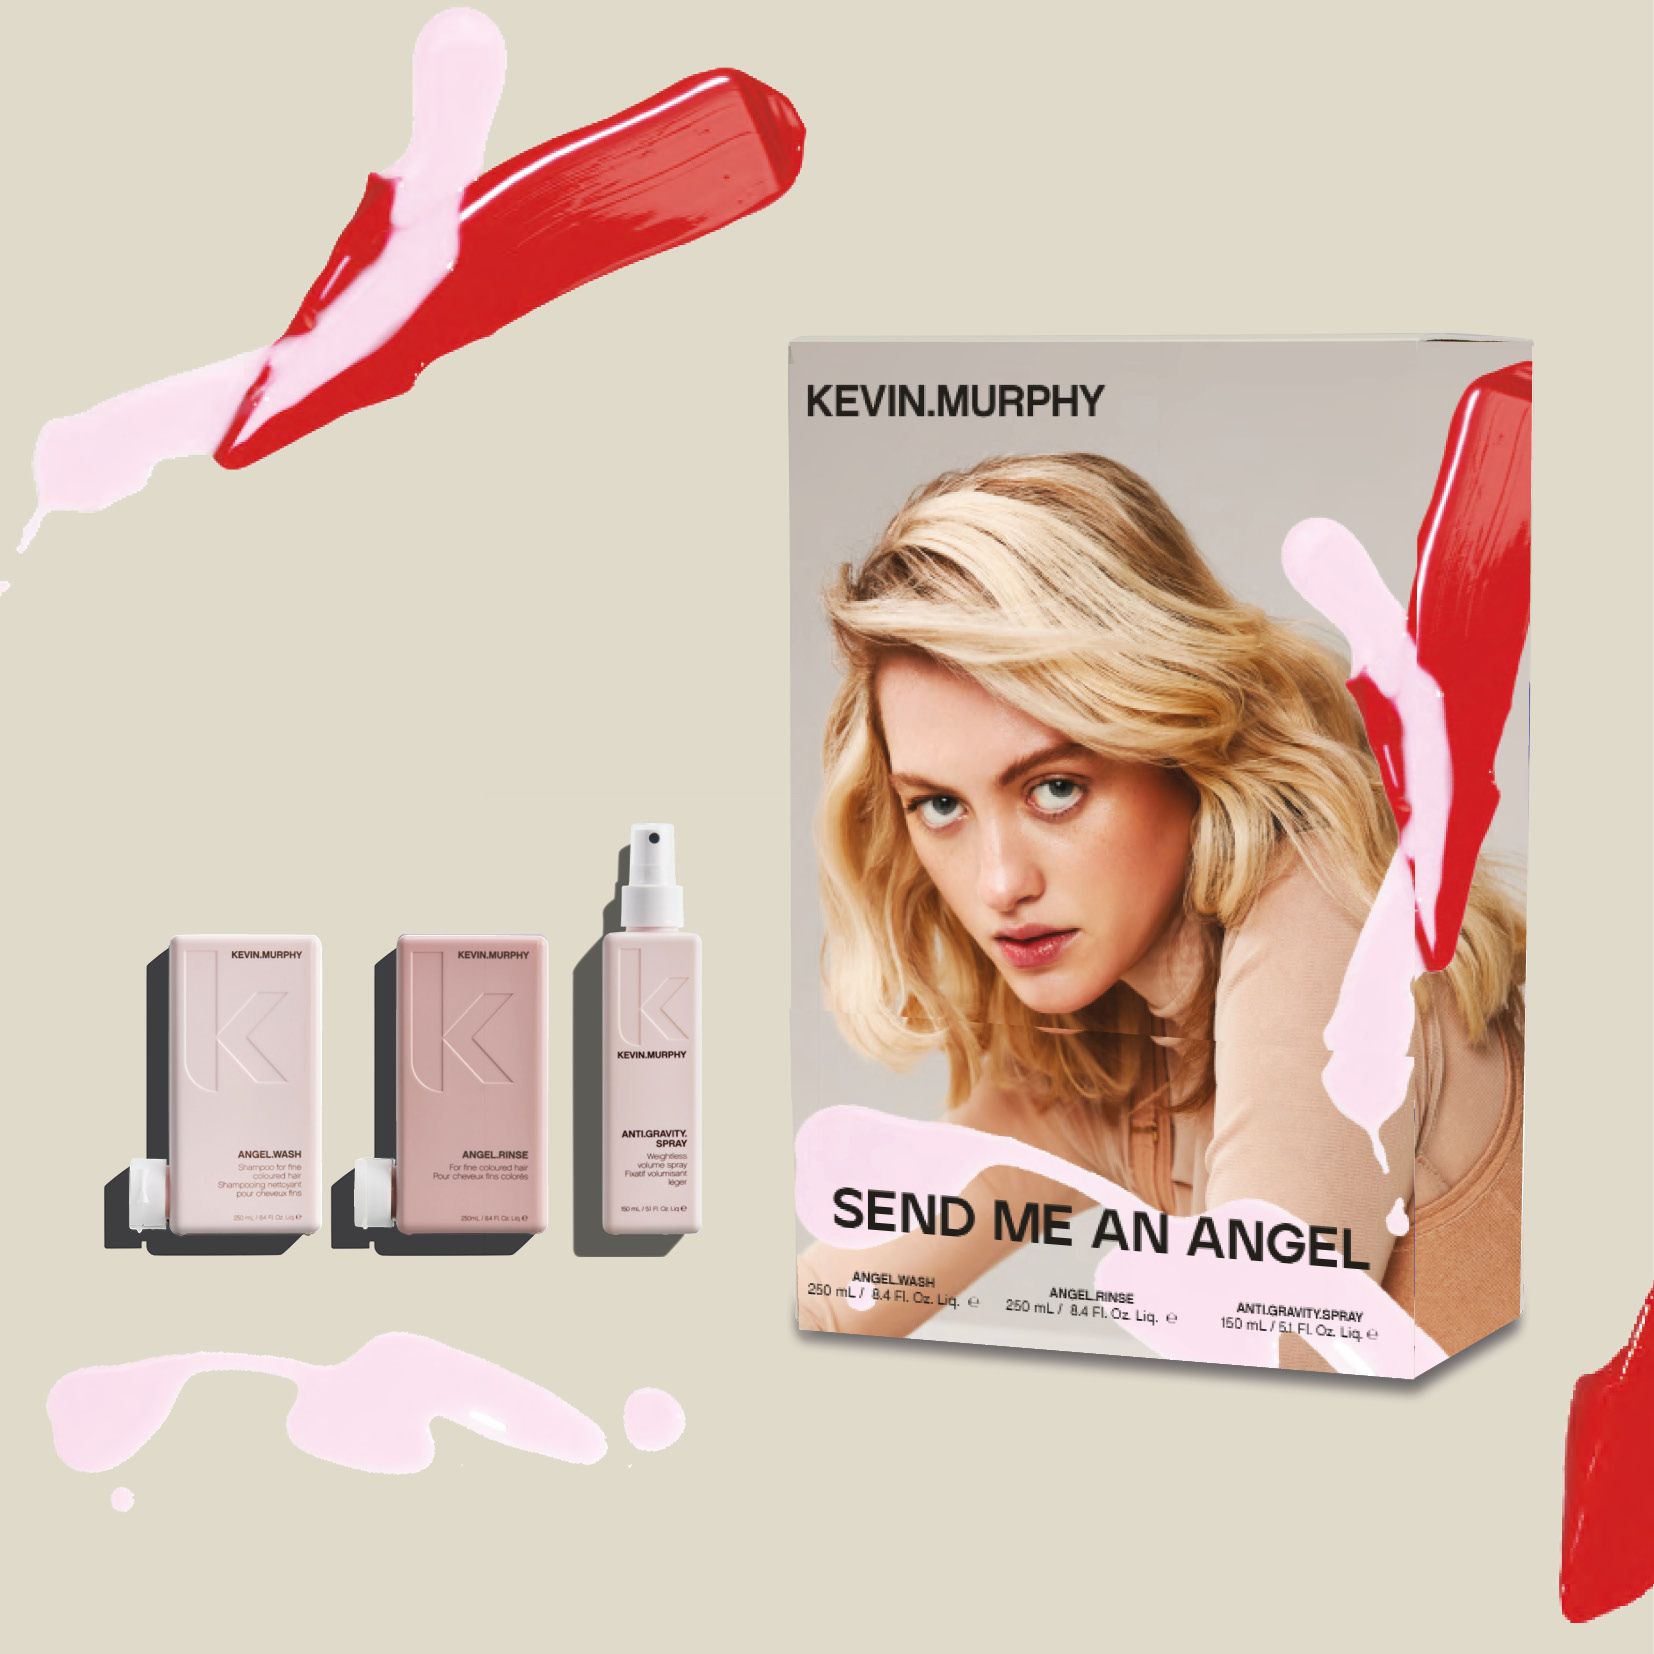 Omslagsbild för “Kevin Murphy Send me an angel - kit”